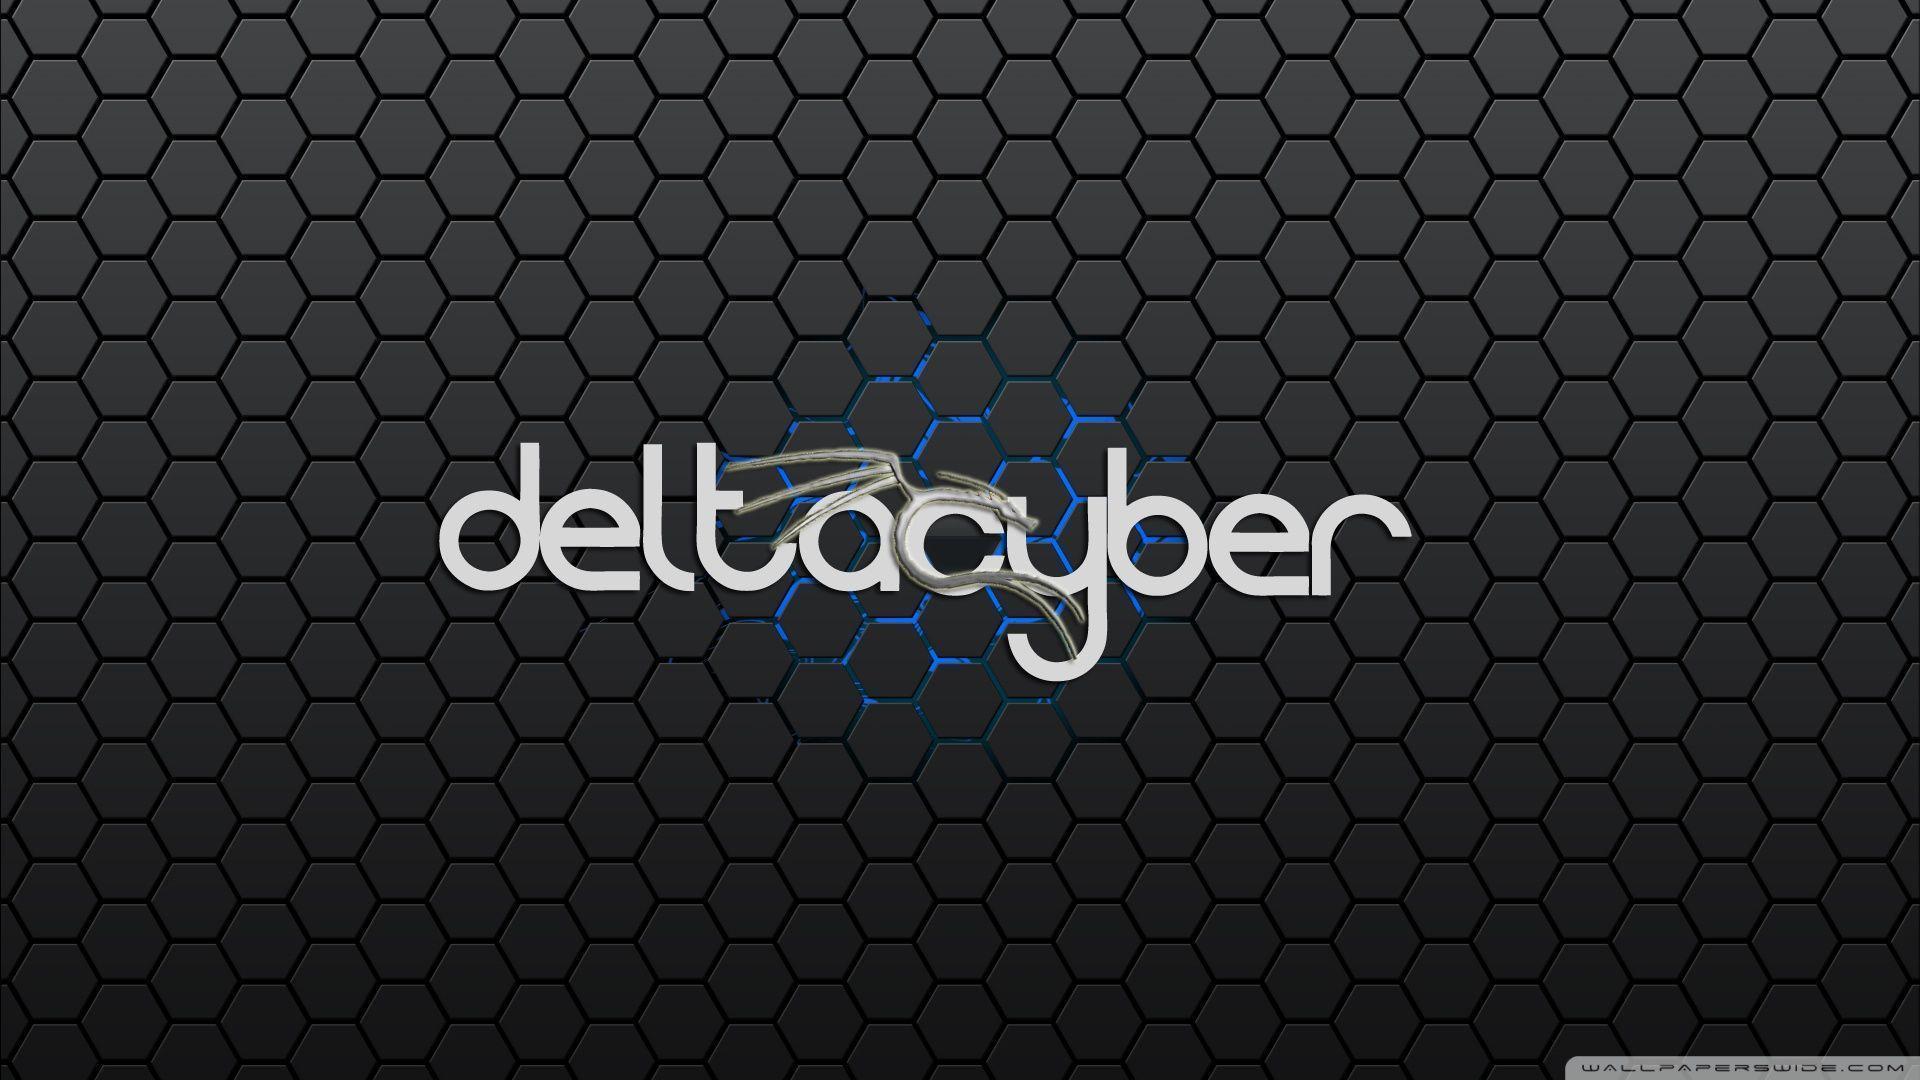 Delta Cyber's Logo HD desktop wallpaper, High Definition